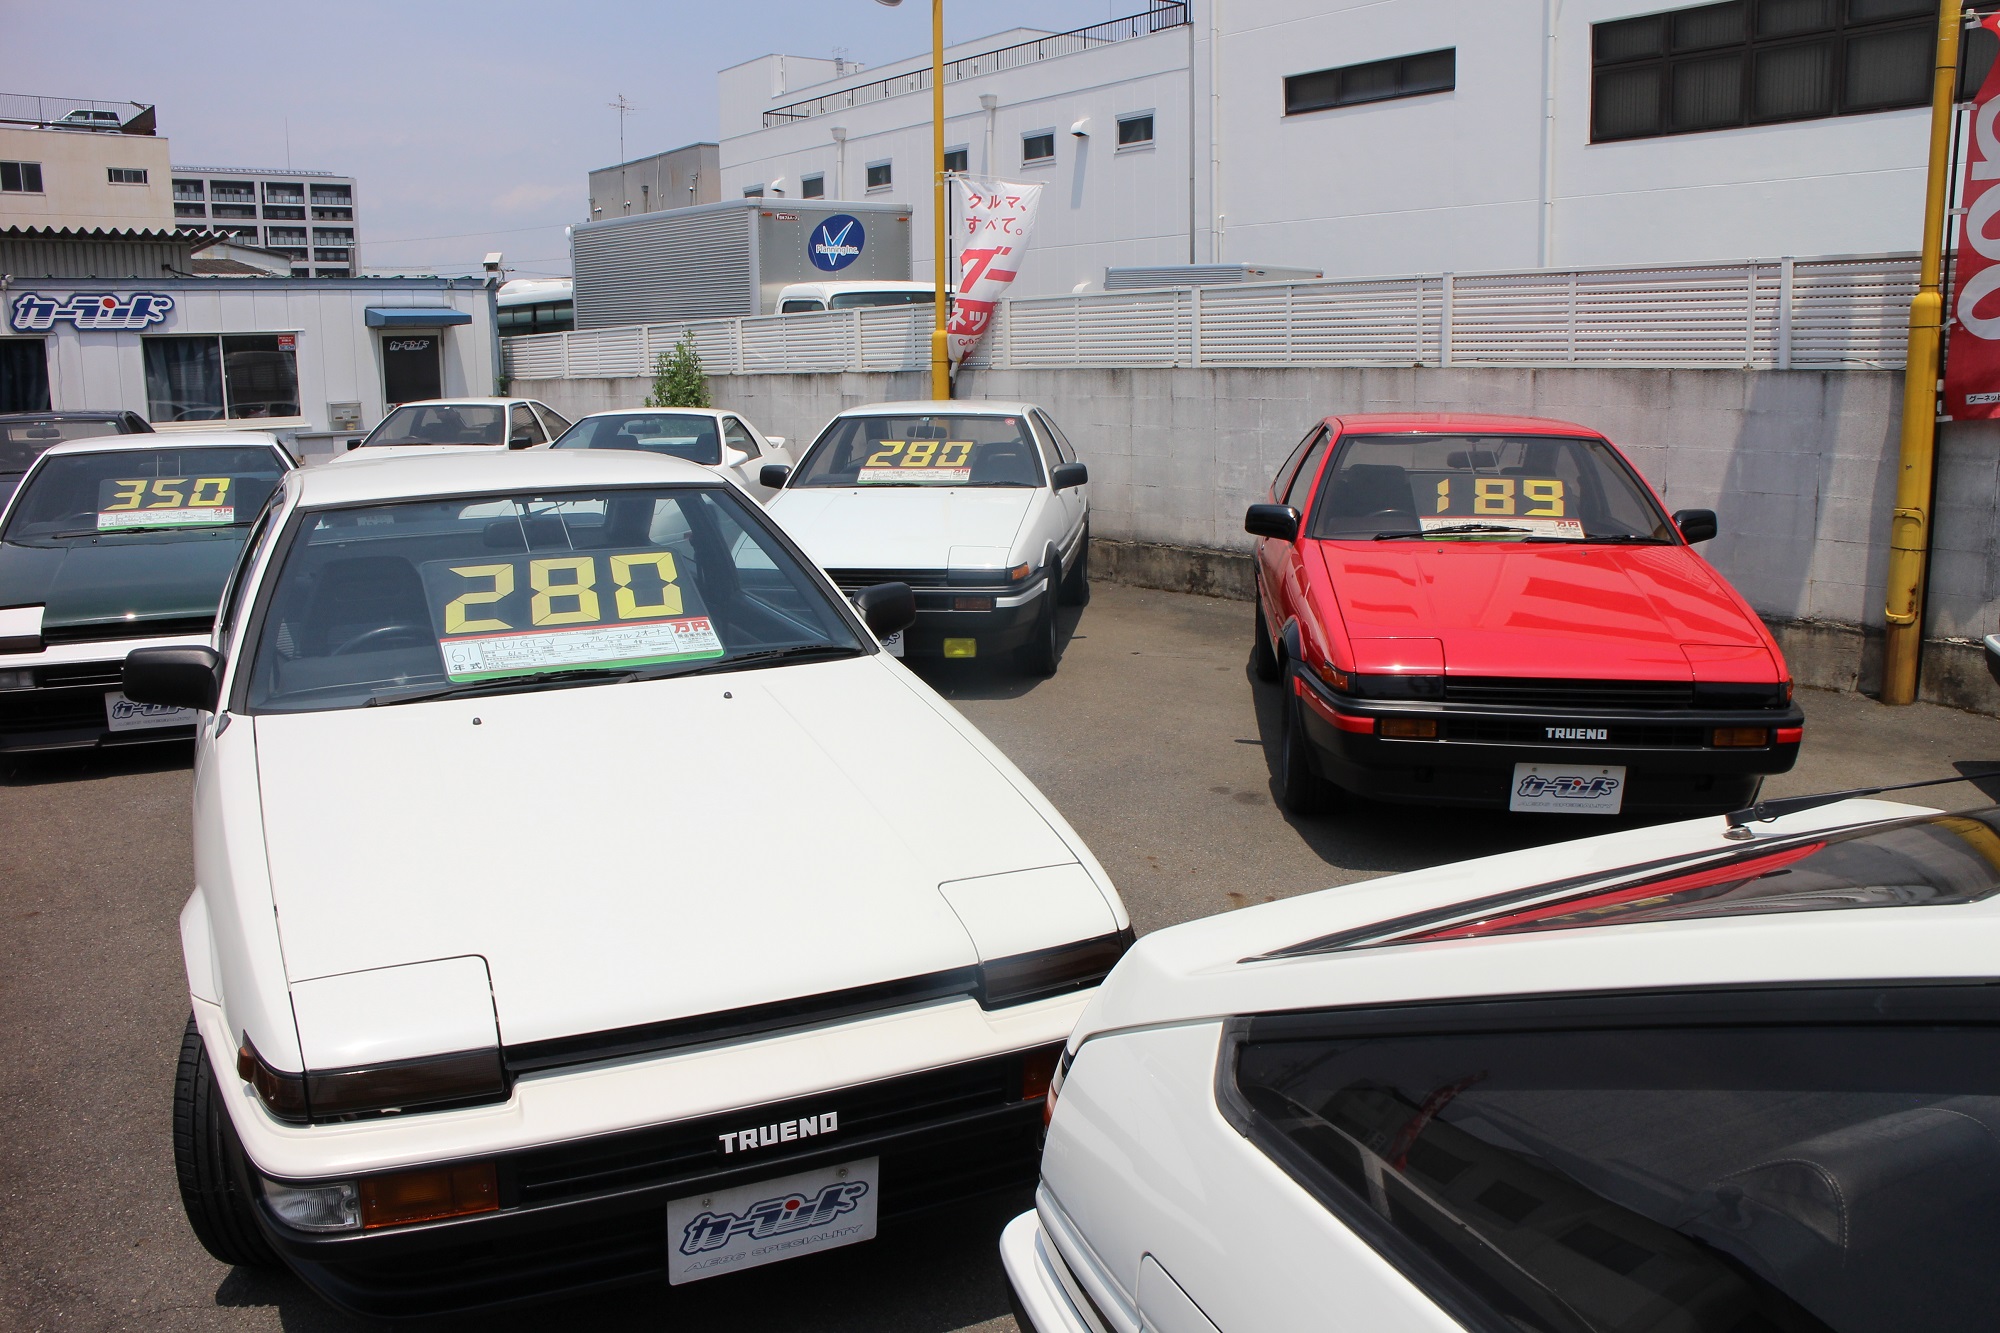 [Image: AEU86 AE86 - Carland 86 specialty garage in Kyoto]